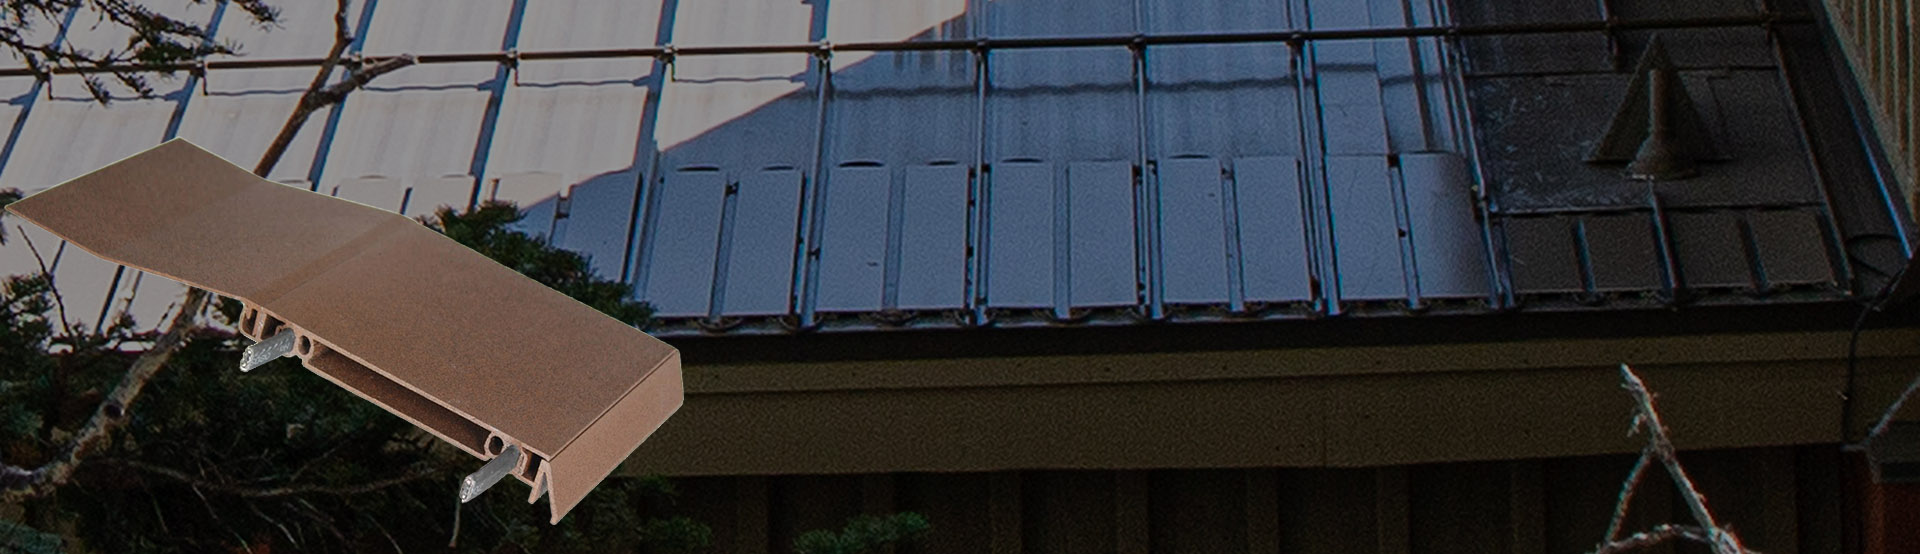 Roof de-icing panels roof heating banner